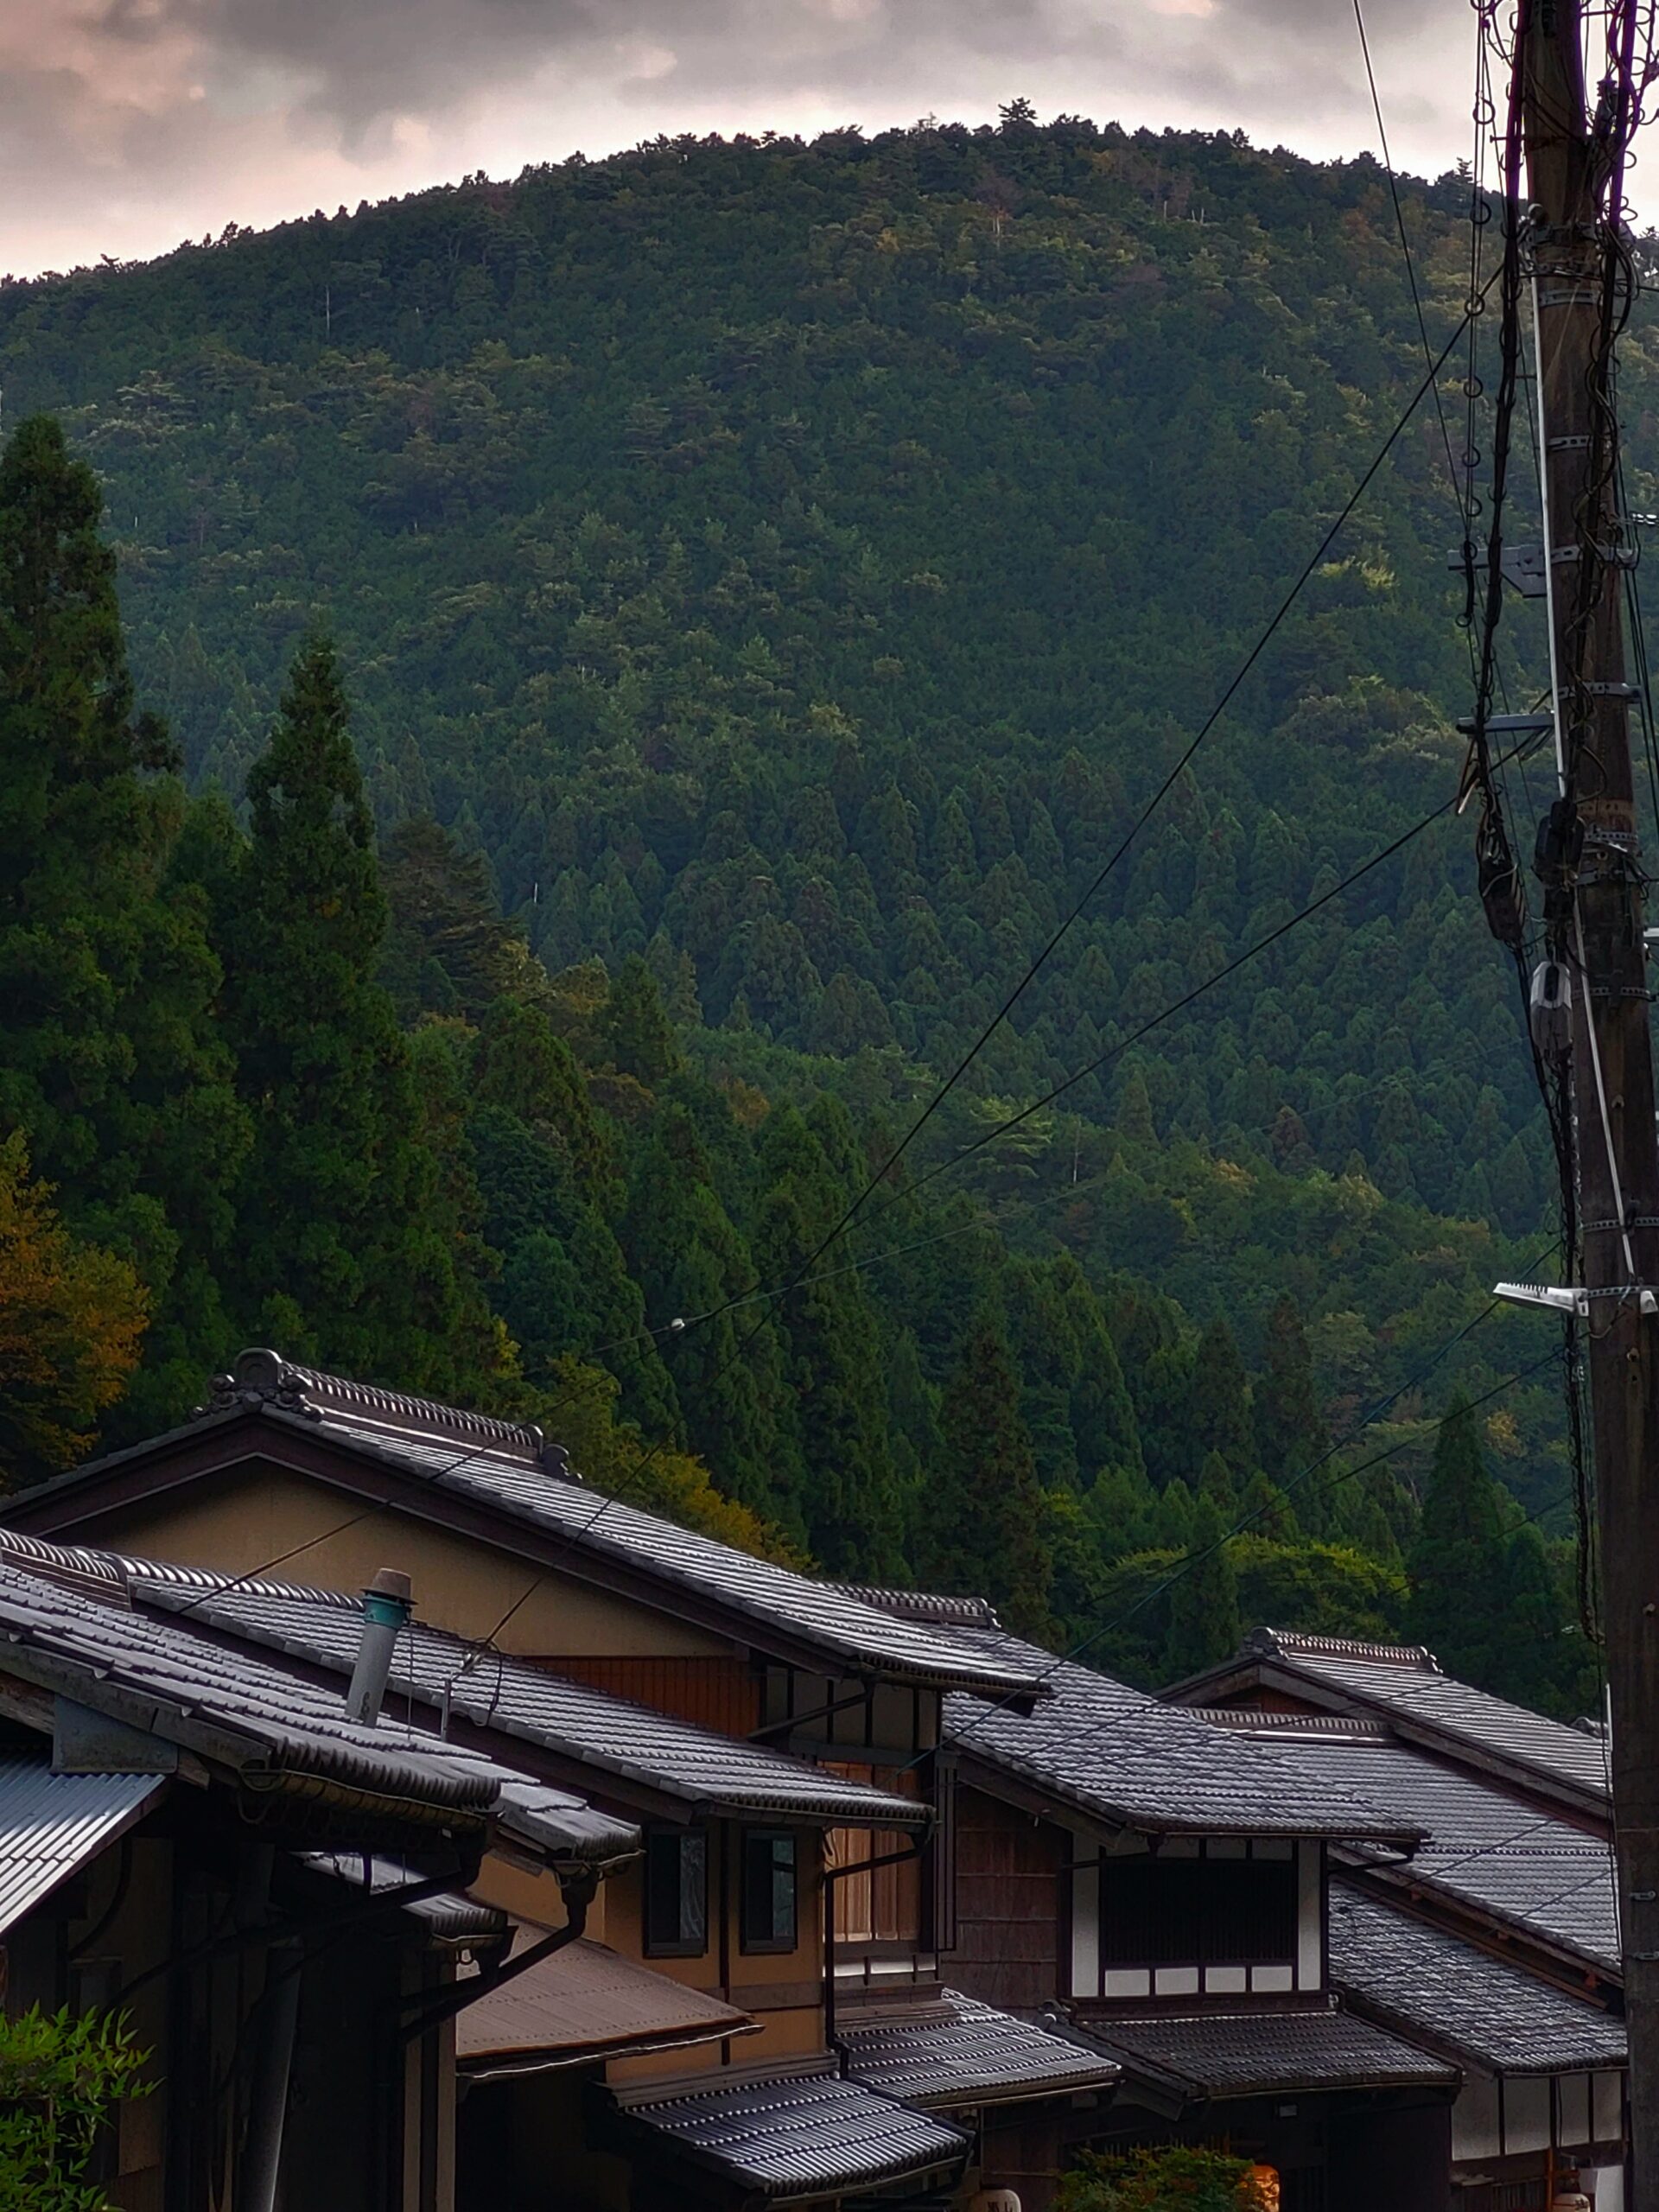 Kyoto through my eyes